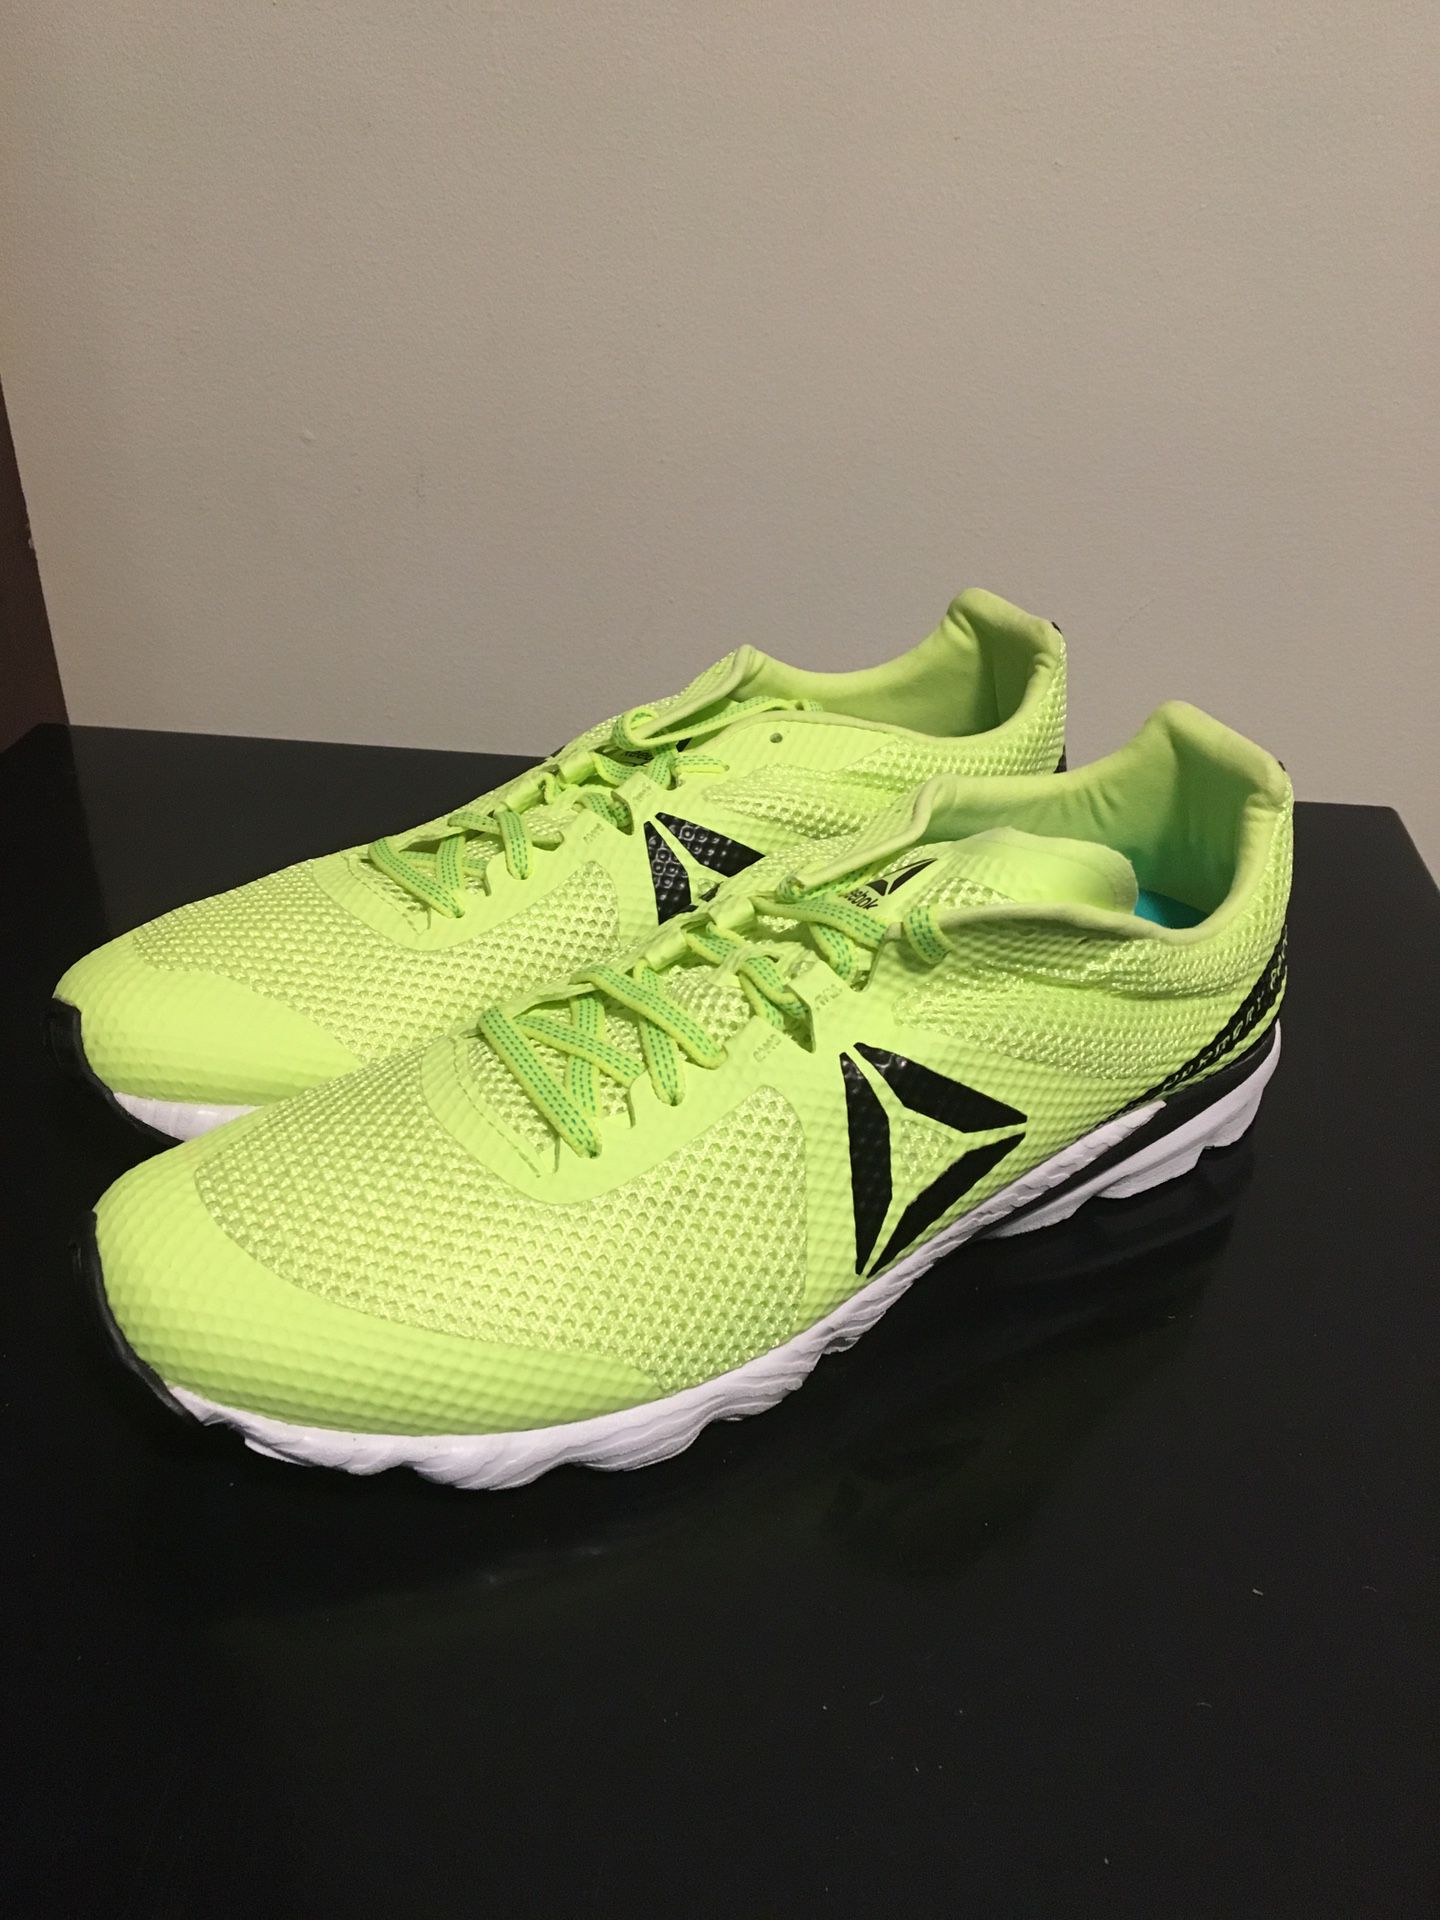 Men's Brand New Reebok Harmony Racer Size 9.5 Neon / White Shoes